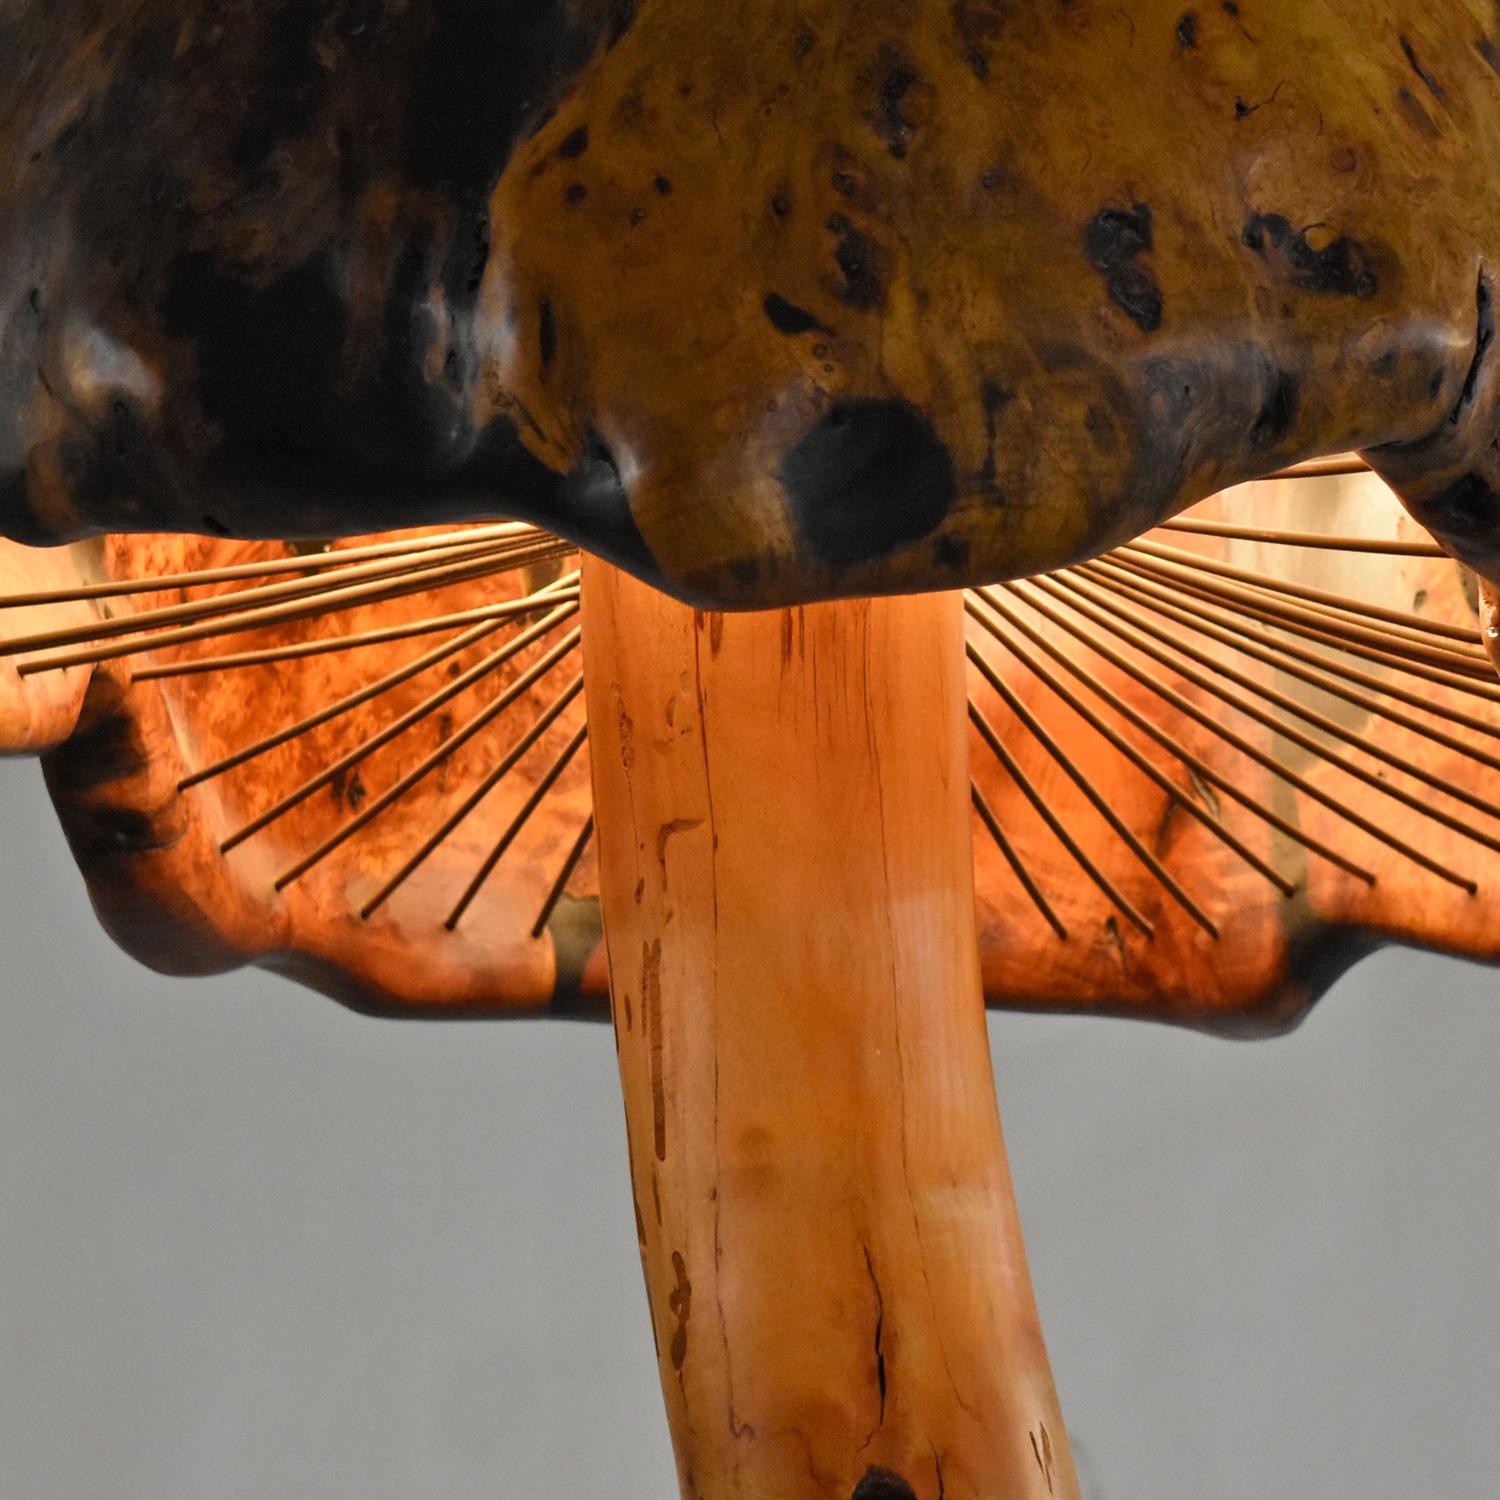 Cypress Giant 8-Foot Tall Tree Trunk Mushroom Floor Lamp with Burl Knot Wood Shade